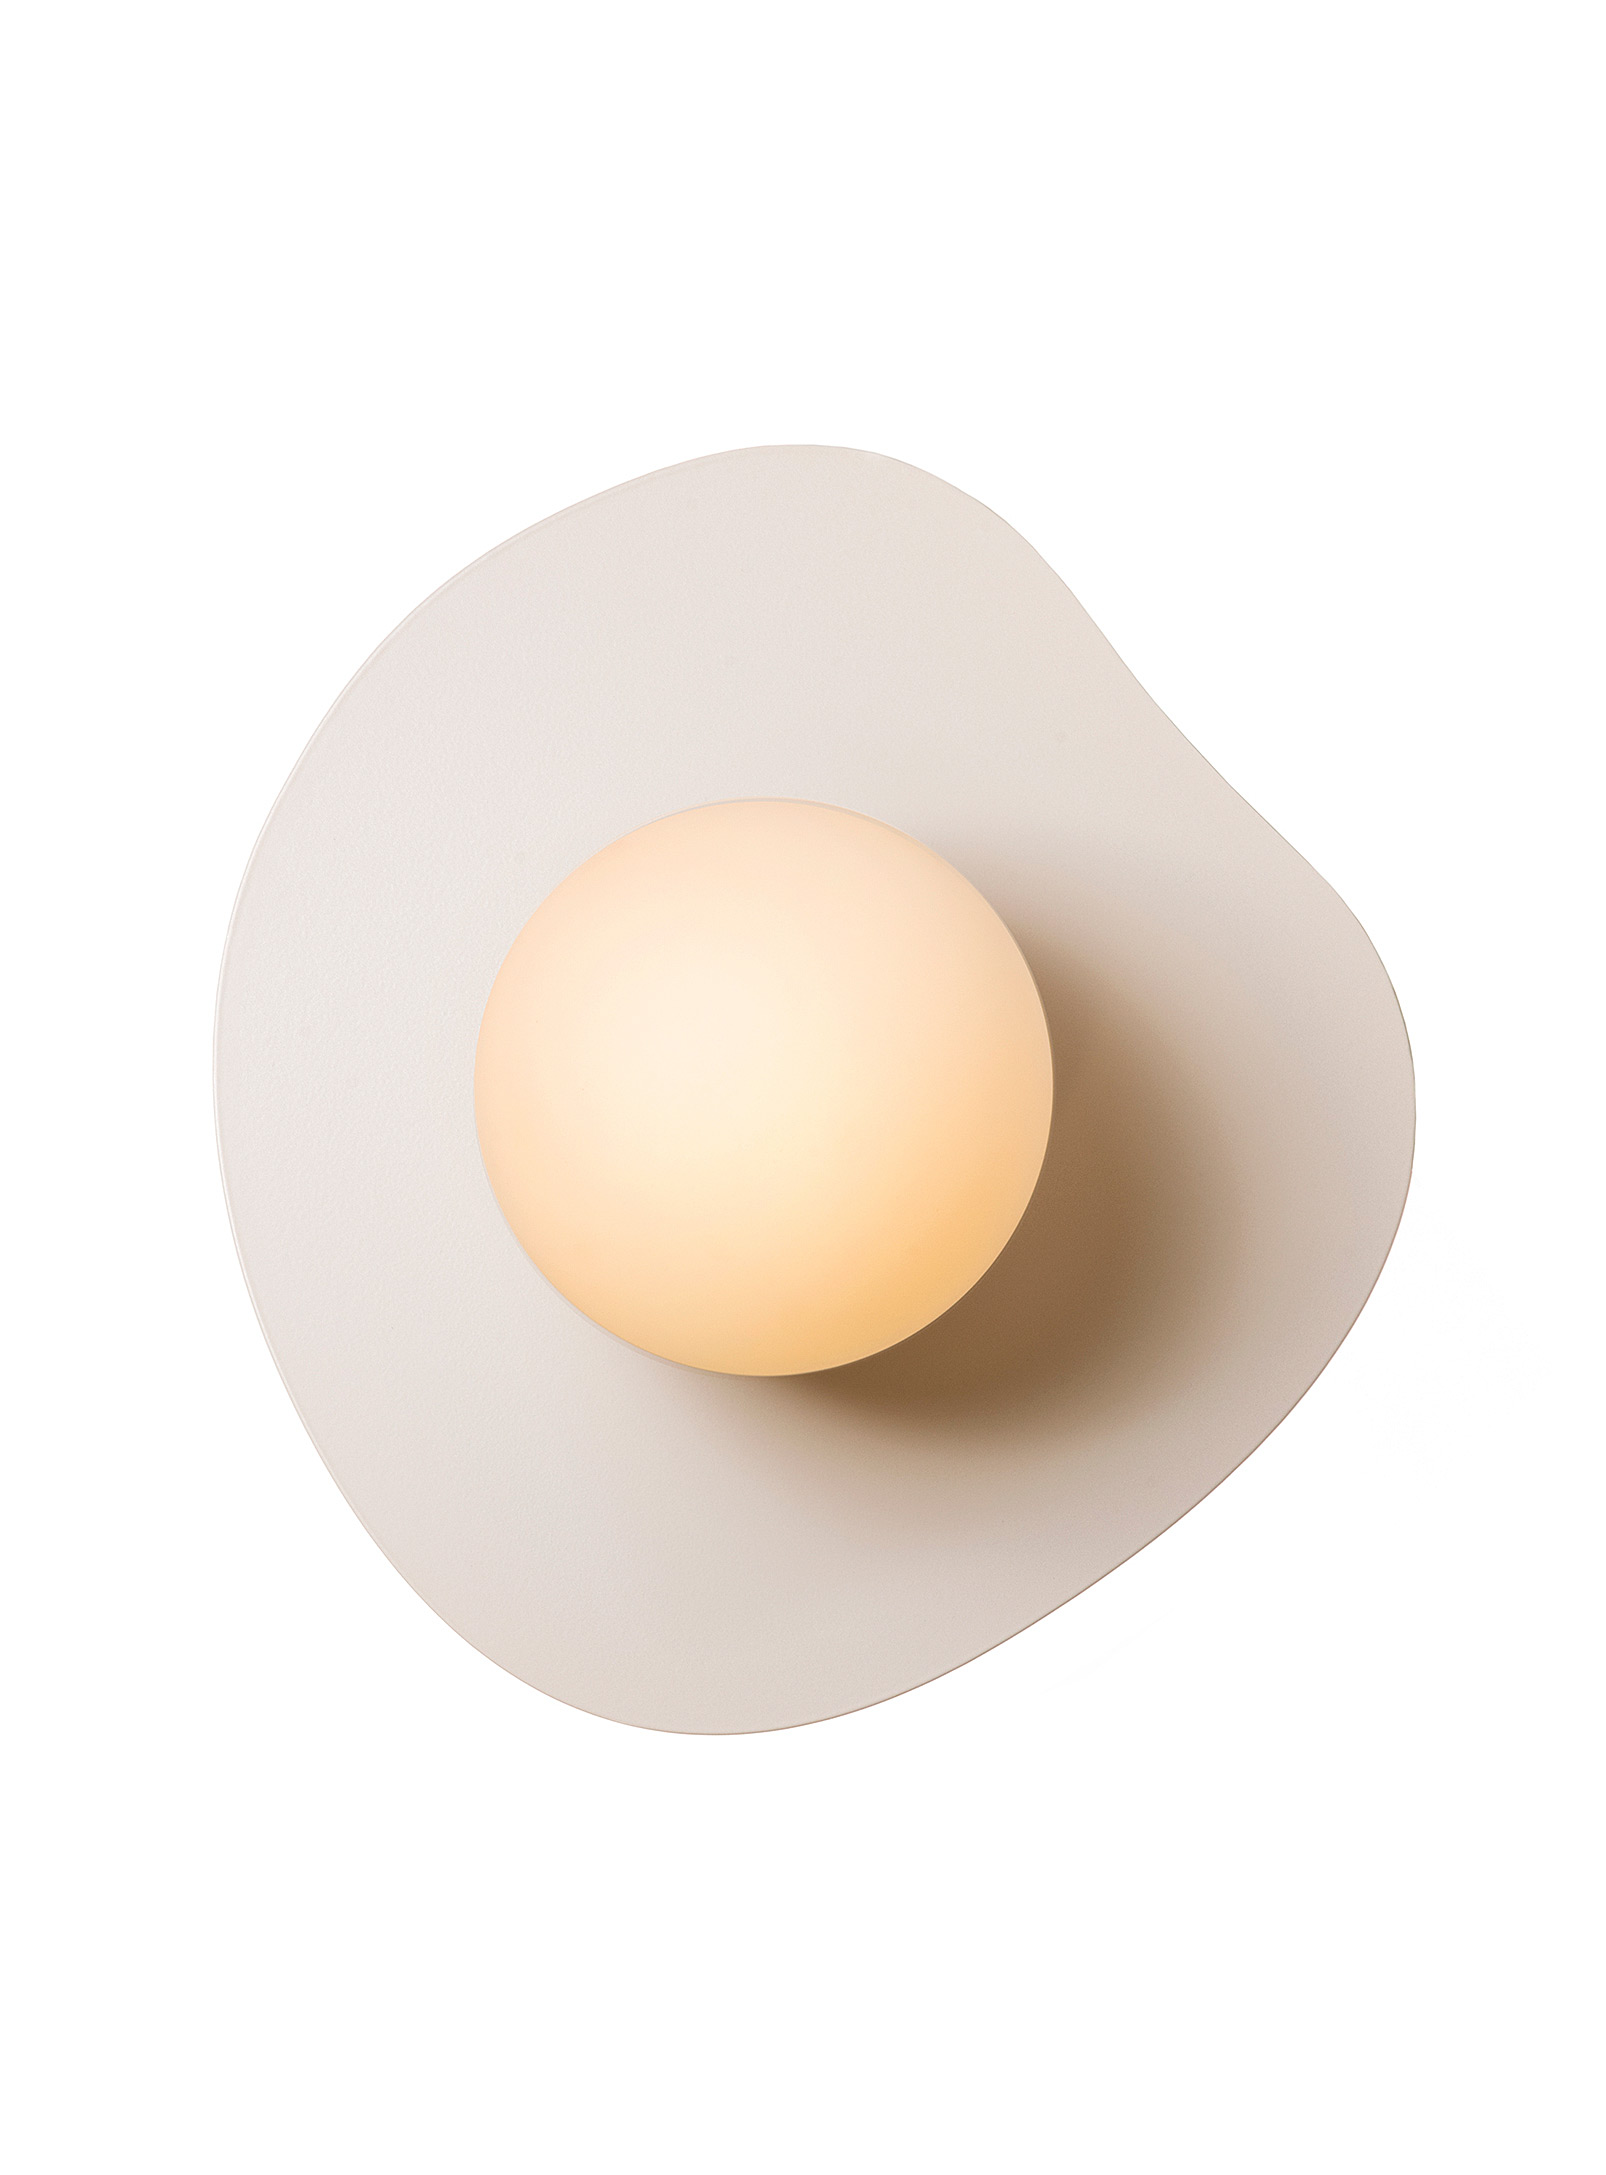 Luminaire Authentik Nopal Asymmetrical Light Fixture In Cream Beige